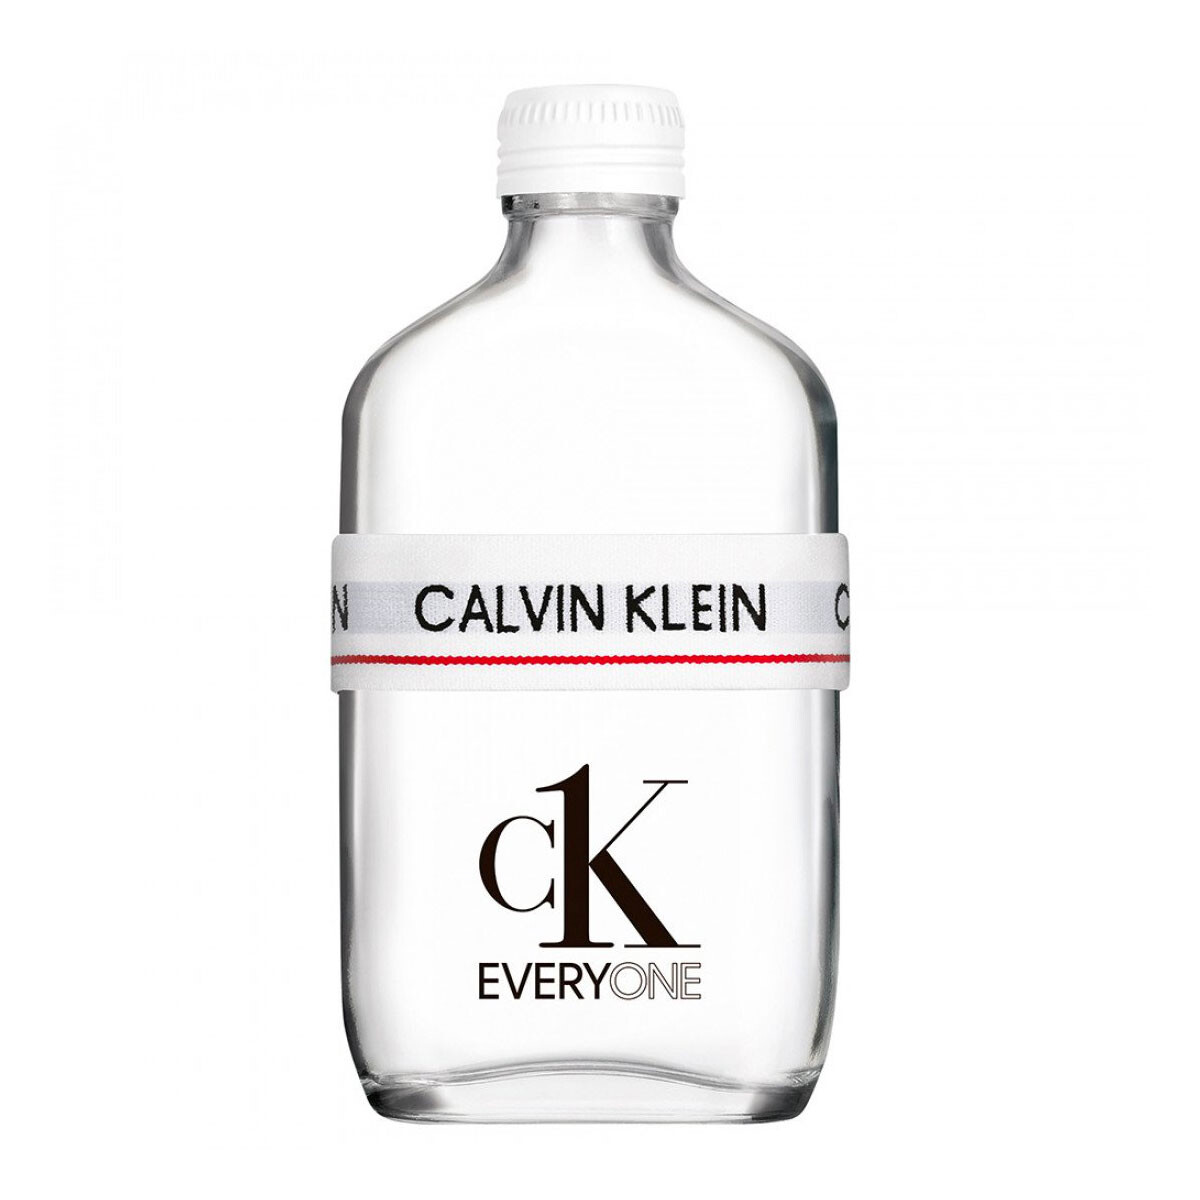 Perfume Calvin Klein CK Everyone - 100ml 